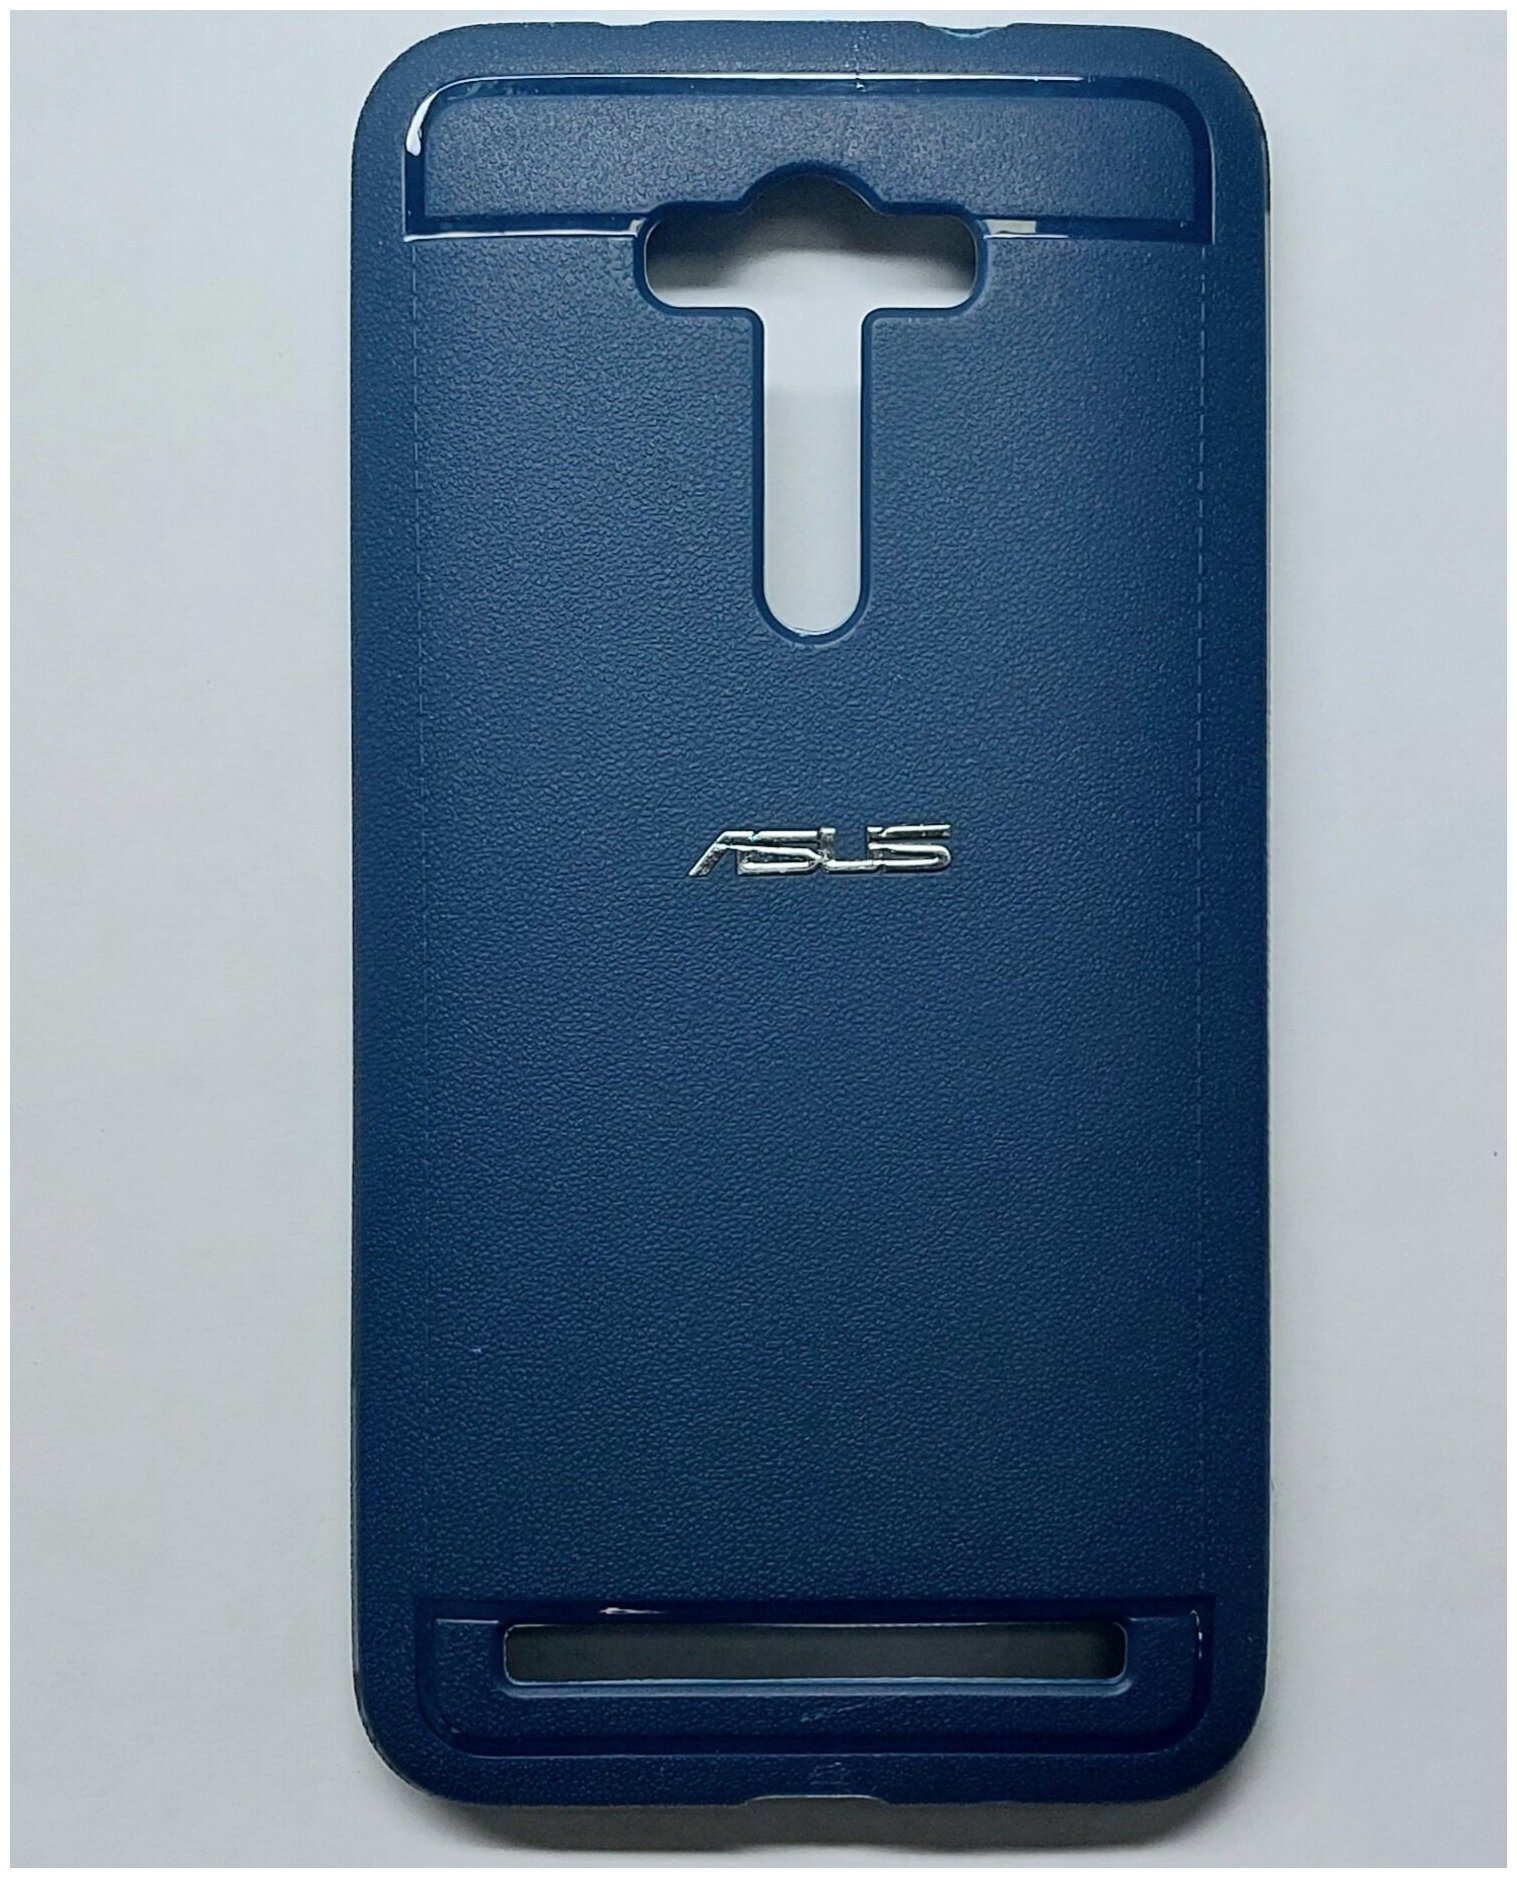 Чехол для Asus ZE550KL Zenfone 2 Laser (5,5)/Selfie zd551kl синий